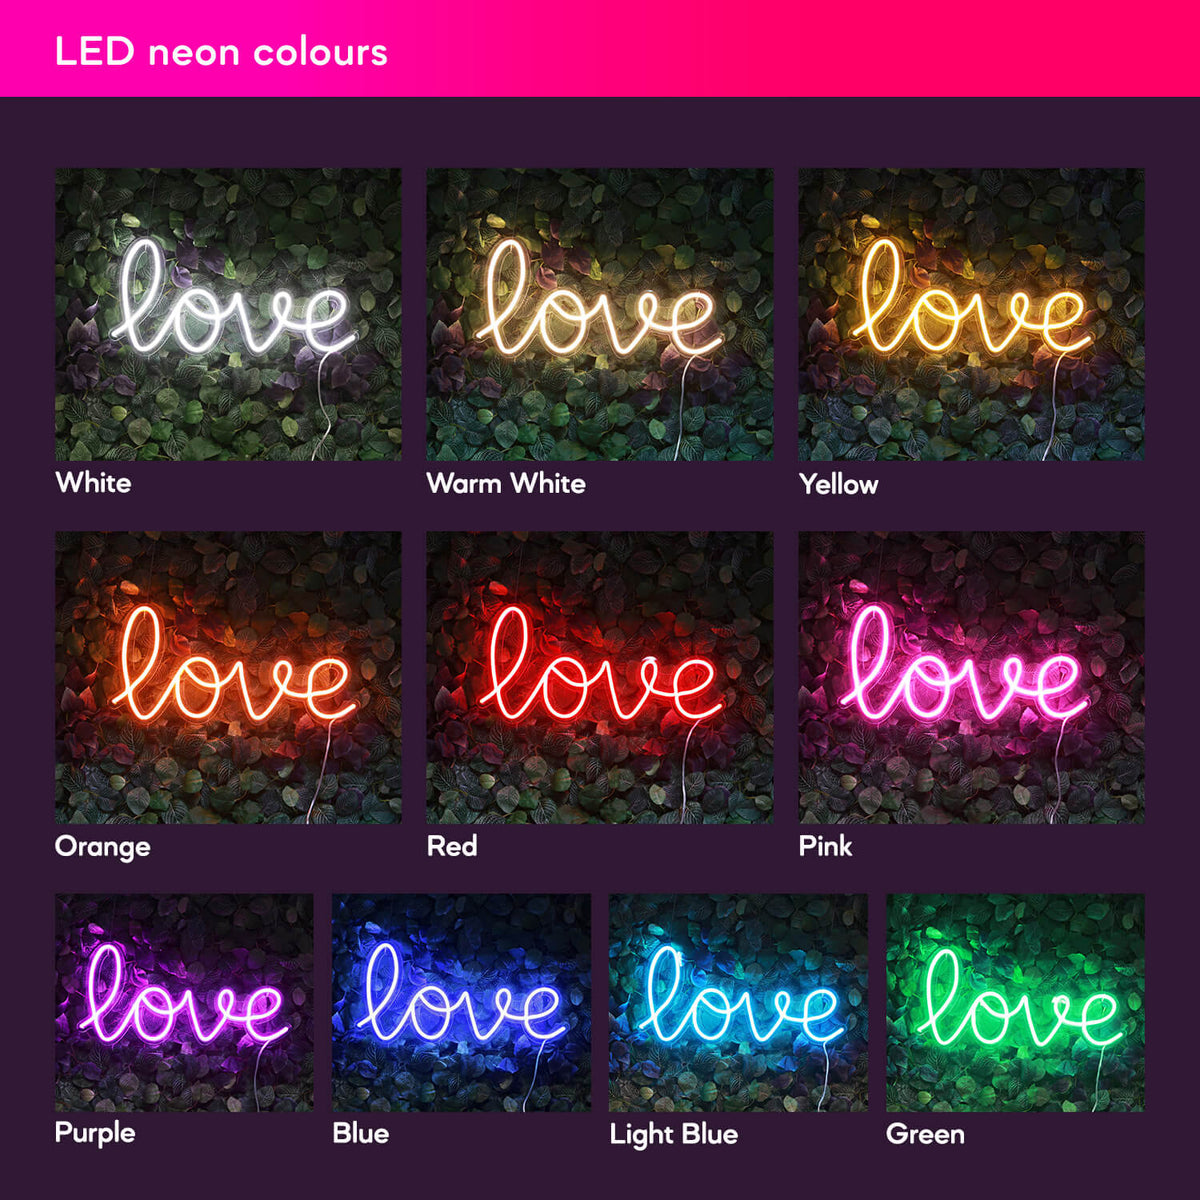 Colour range for neon sign